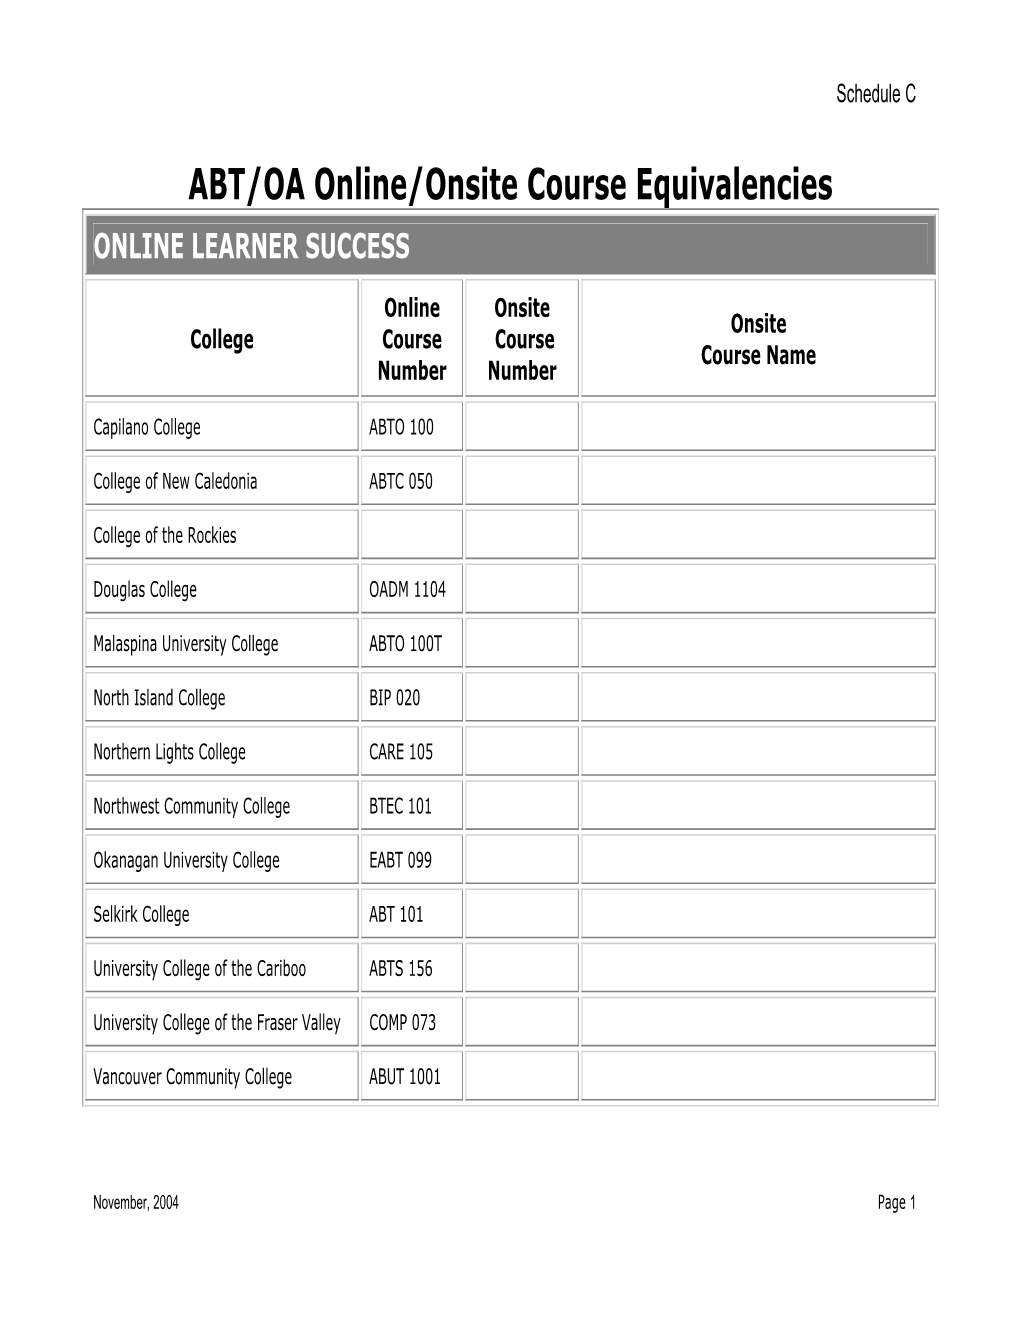 ABT/OA Online/Onsite Course Equivalencies ONLINE LEARNER SUCCESS